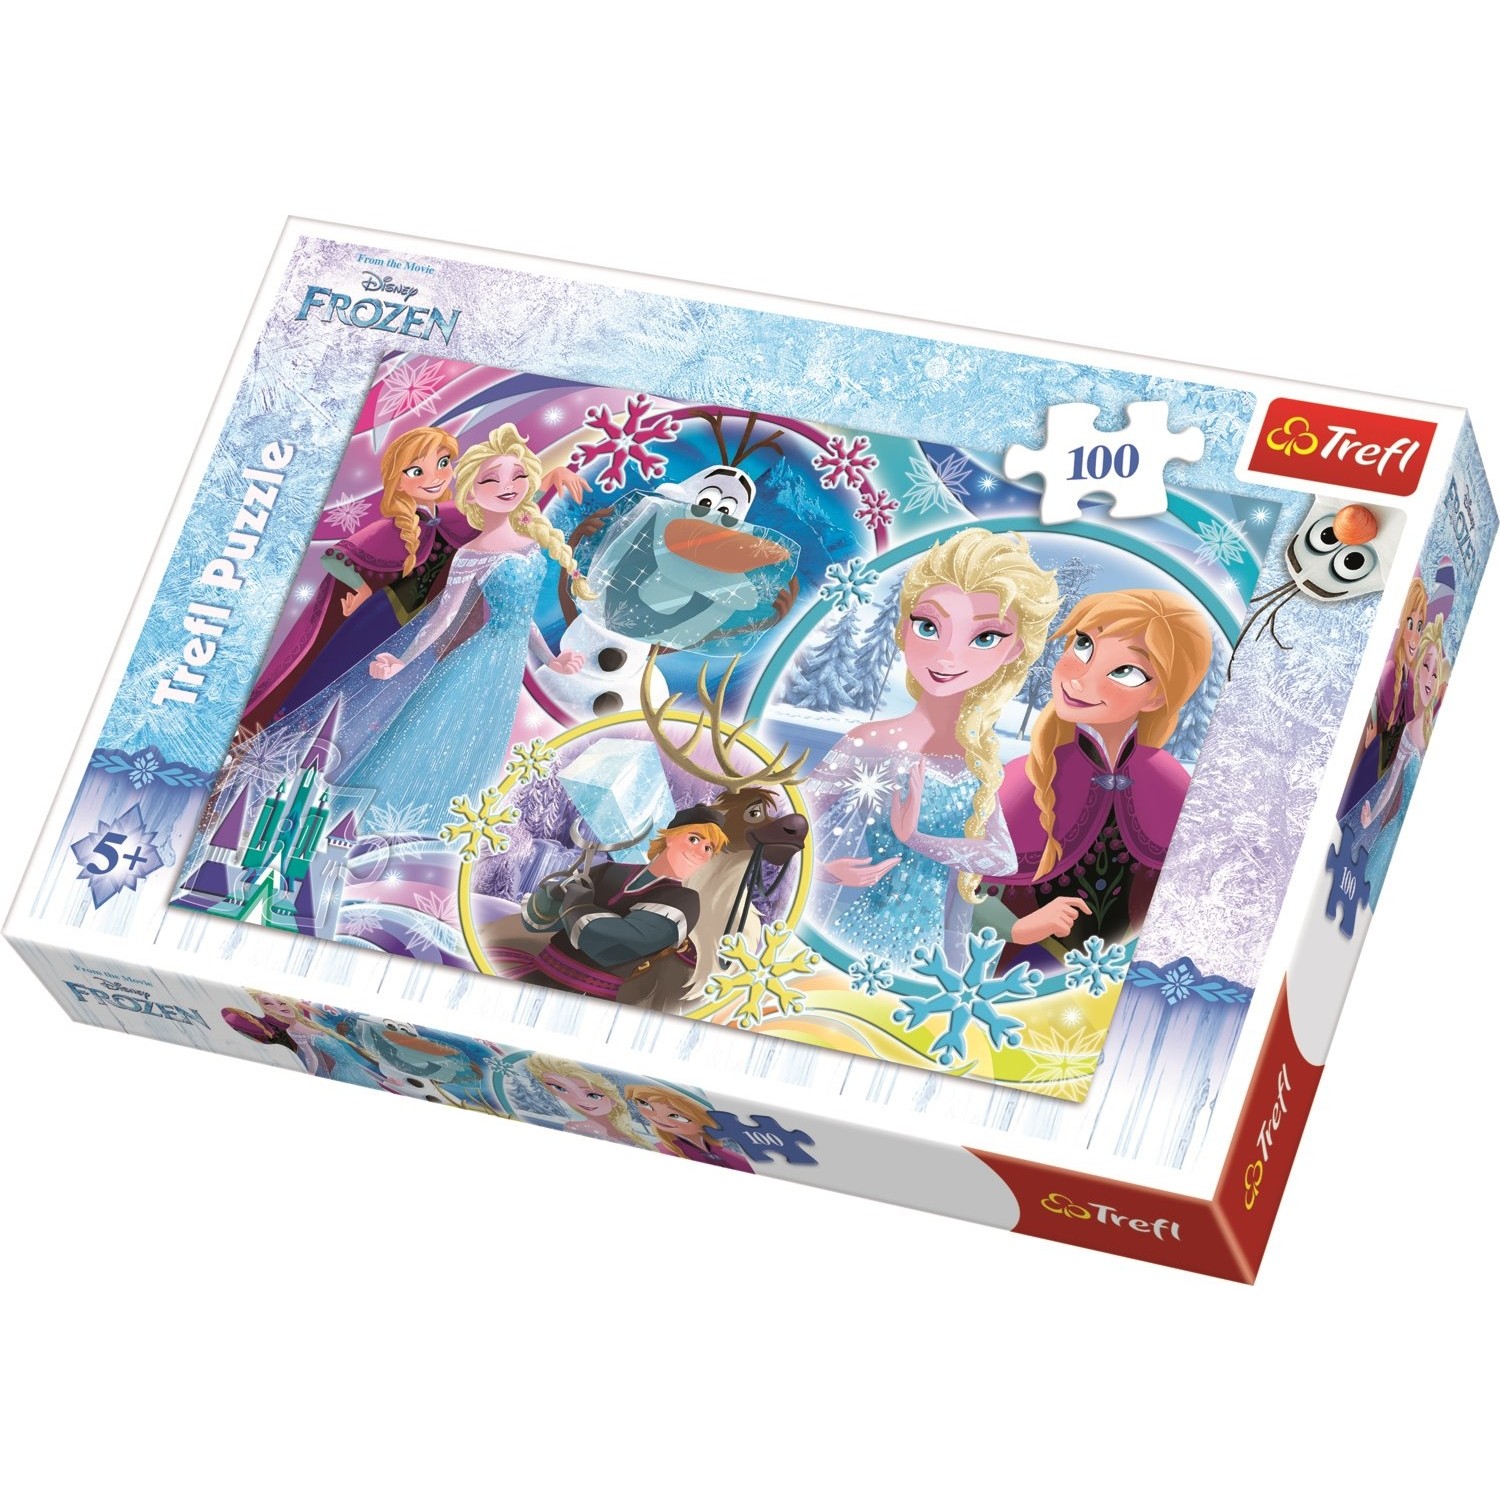 Trefl Puzzle Frozen, Disney 100 Parça Puzzle Fiyatı